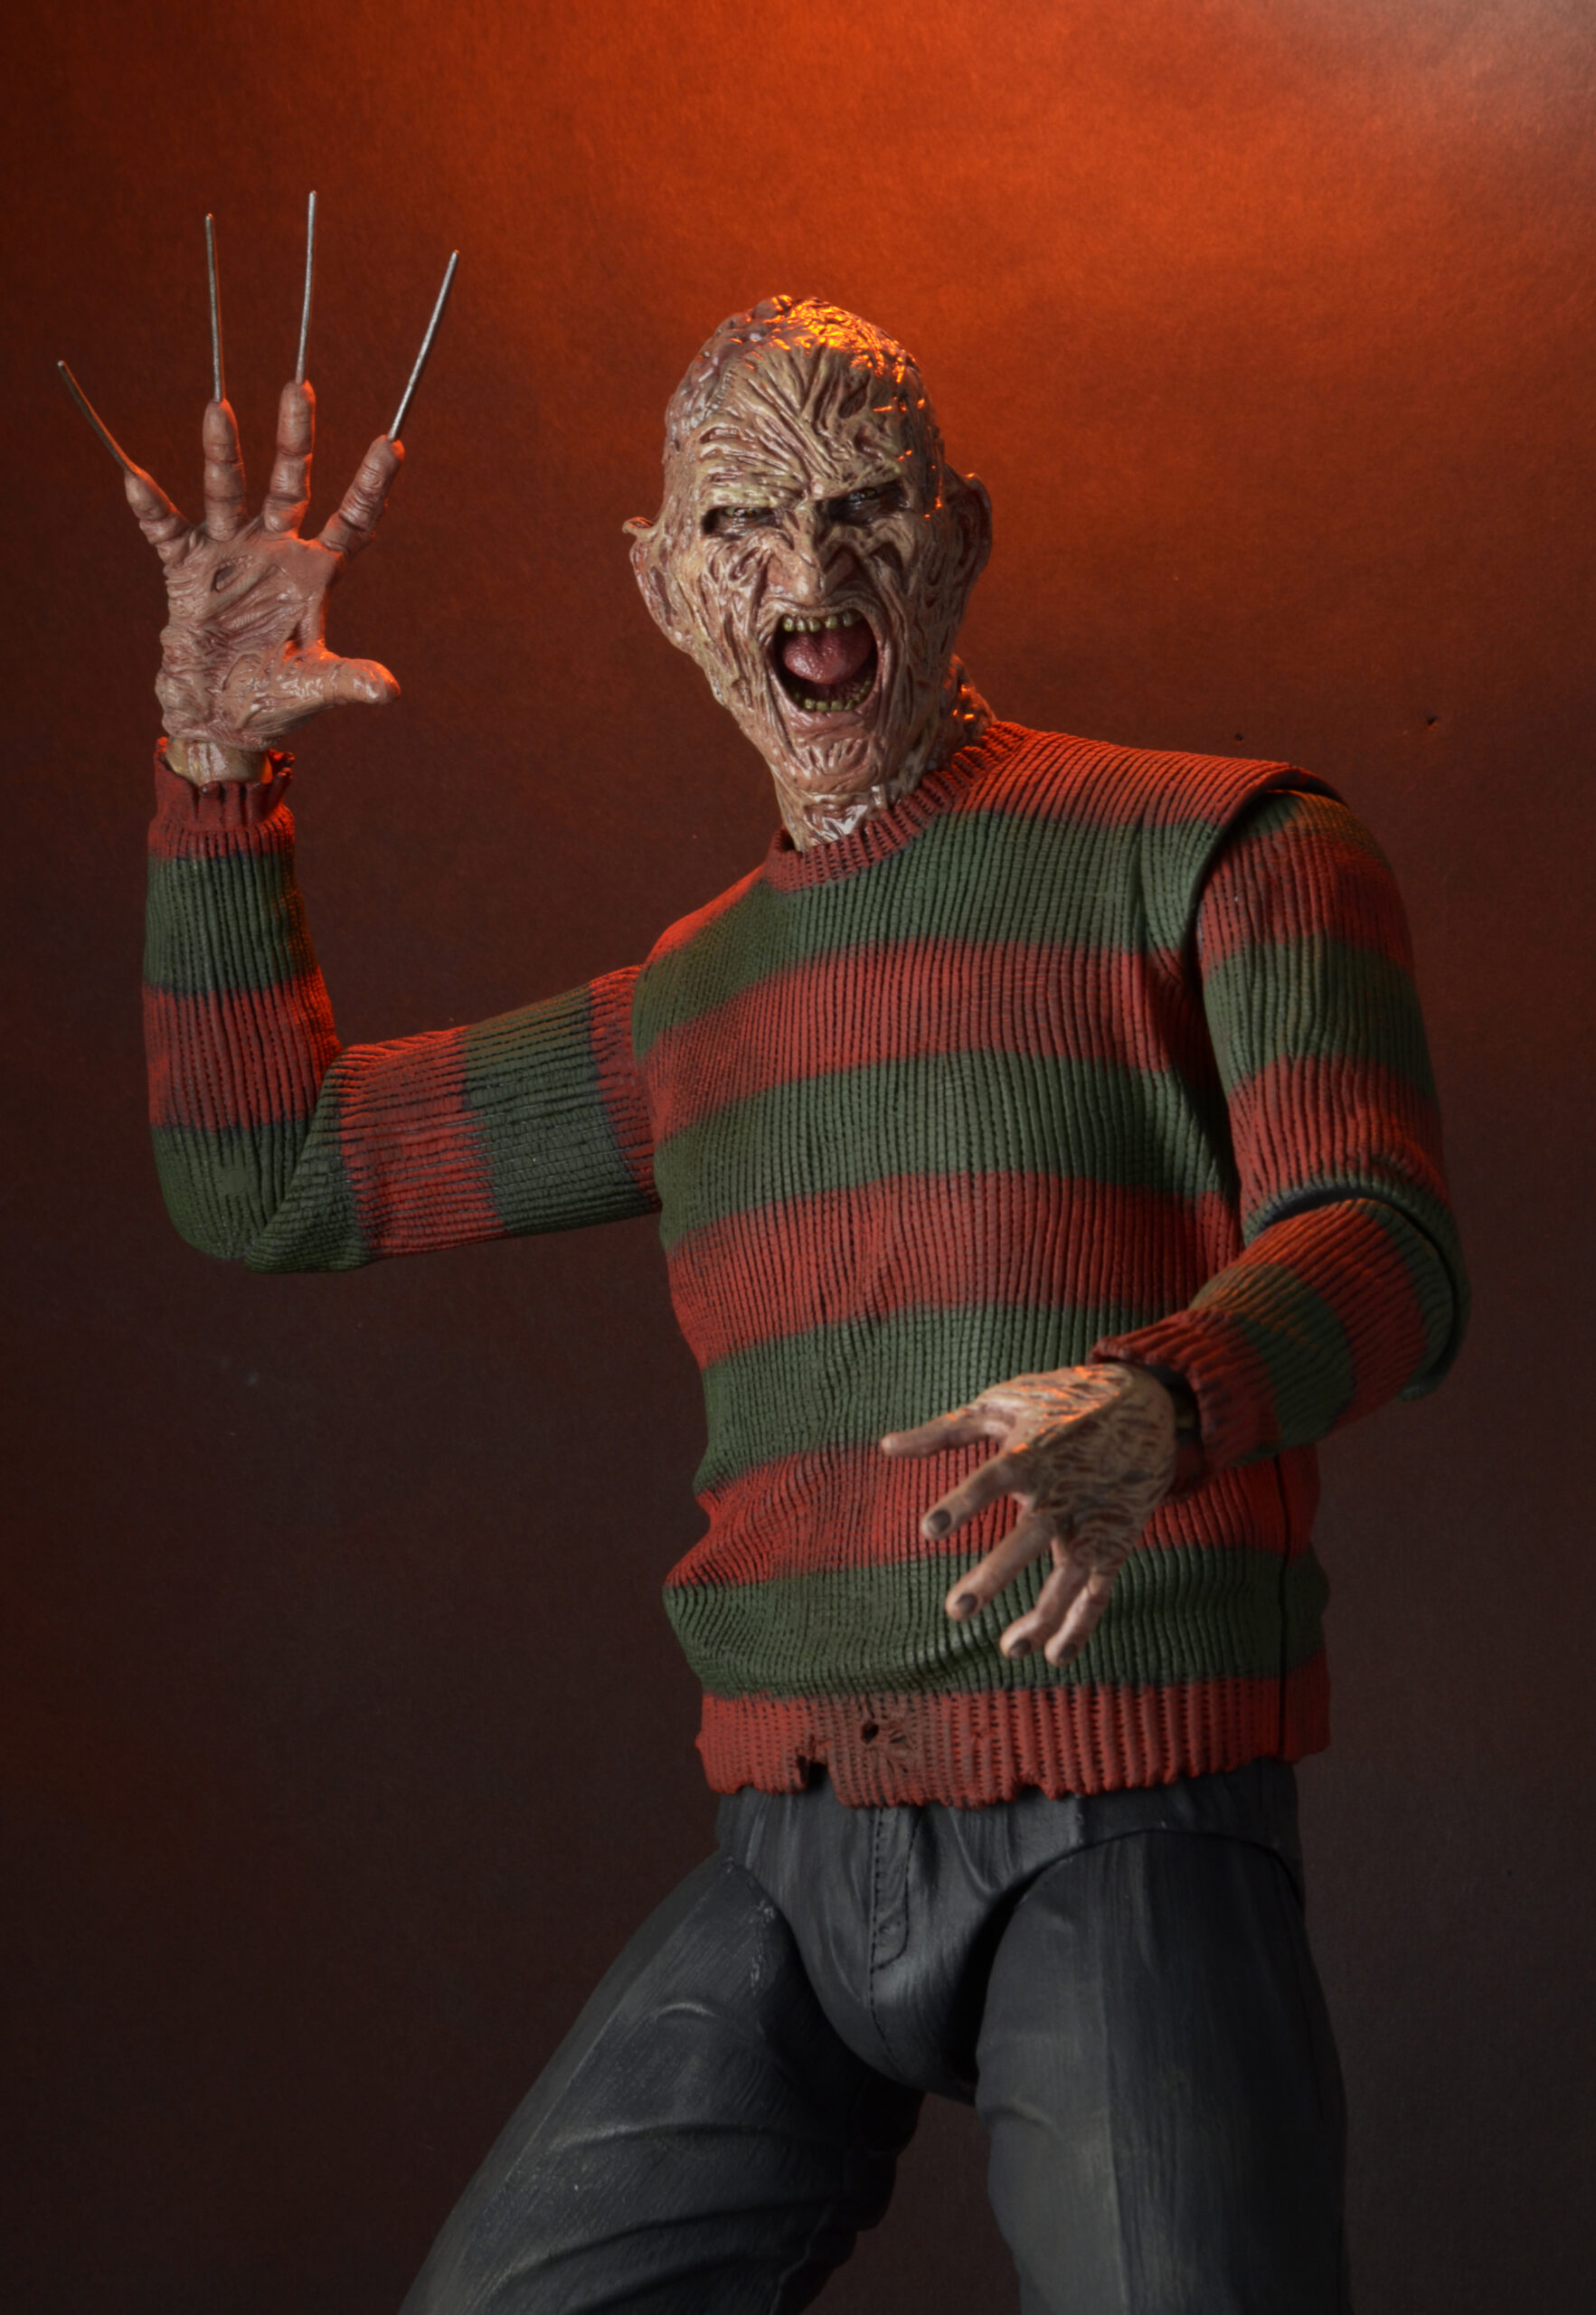 Neca Reel Toys Nightmare on Elm Street 4 Dream Masters Freddy